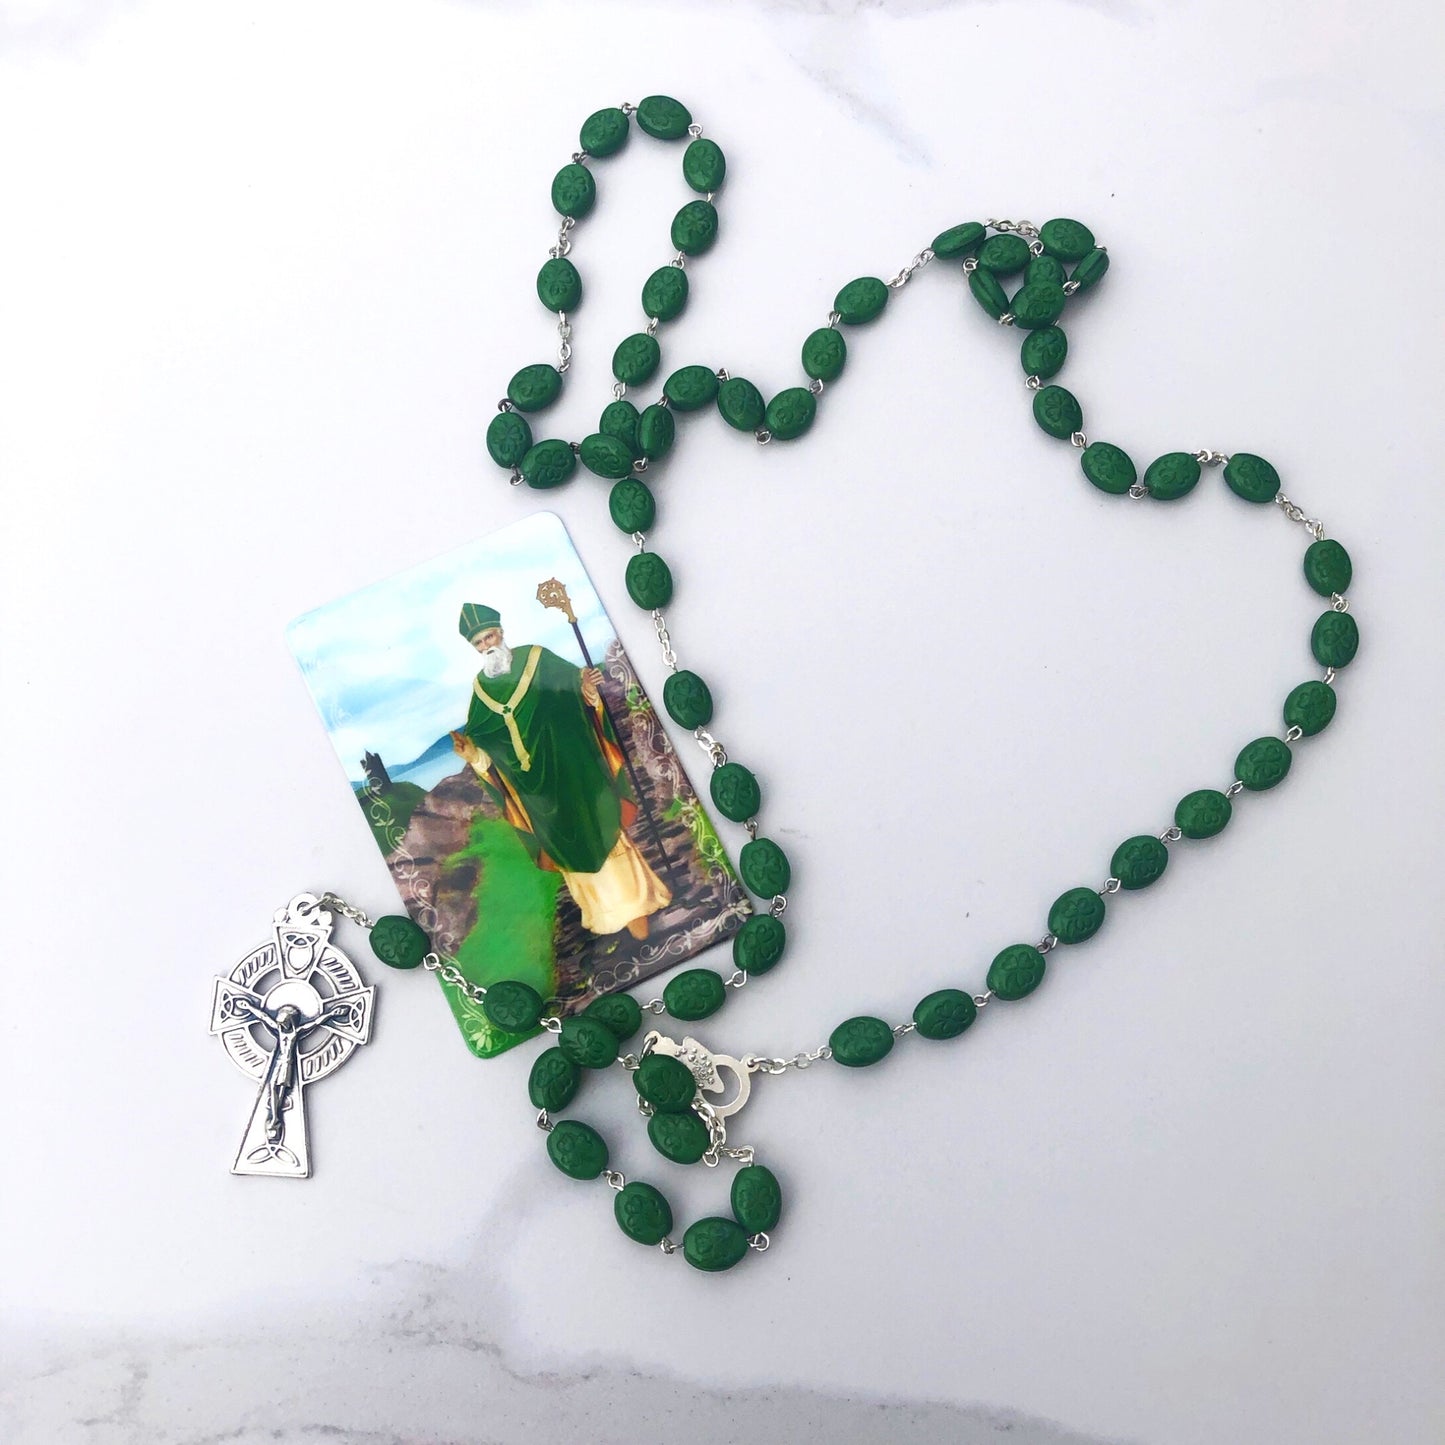 Rosary: Irish/Green Beads with Celtic Cross